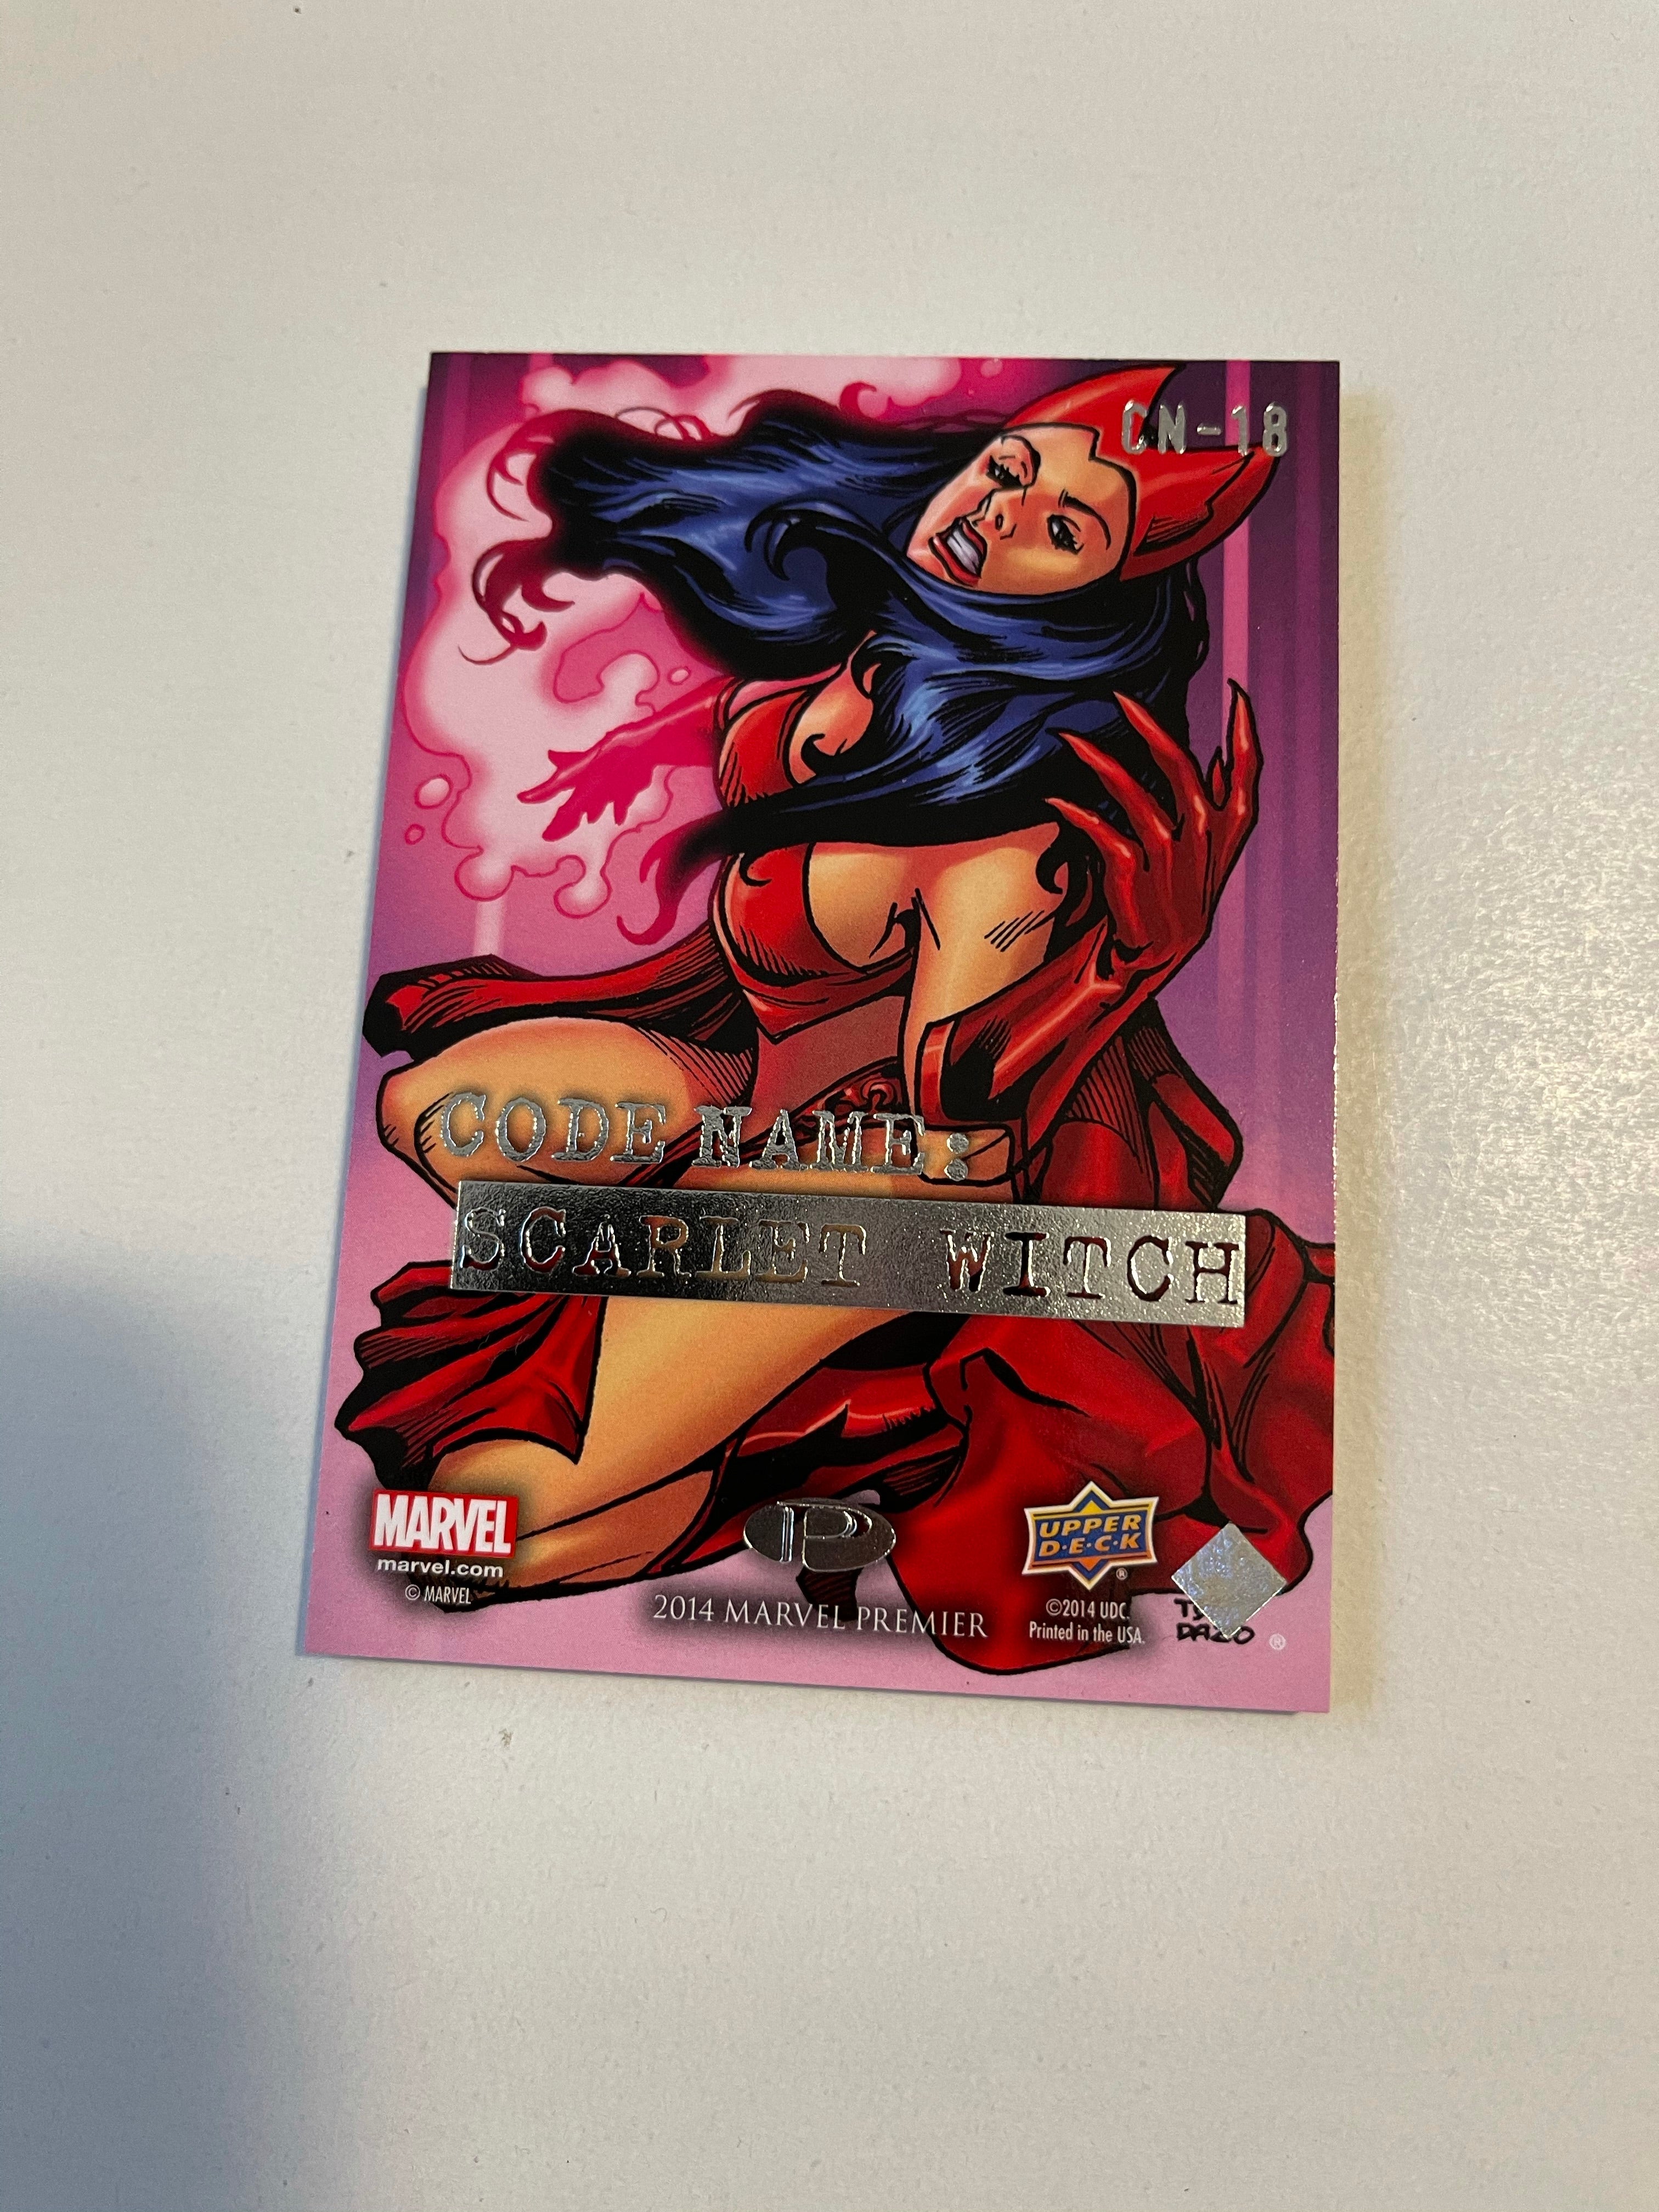 Avengers Scarlet Witch rare Marvel memorabilia insert card 2014